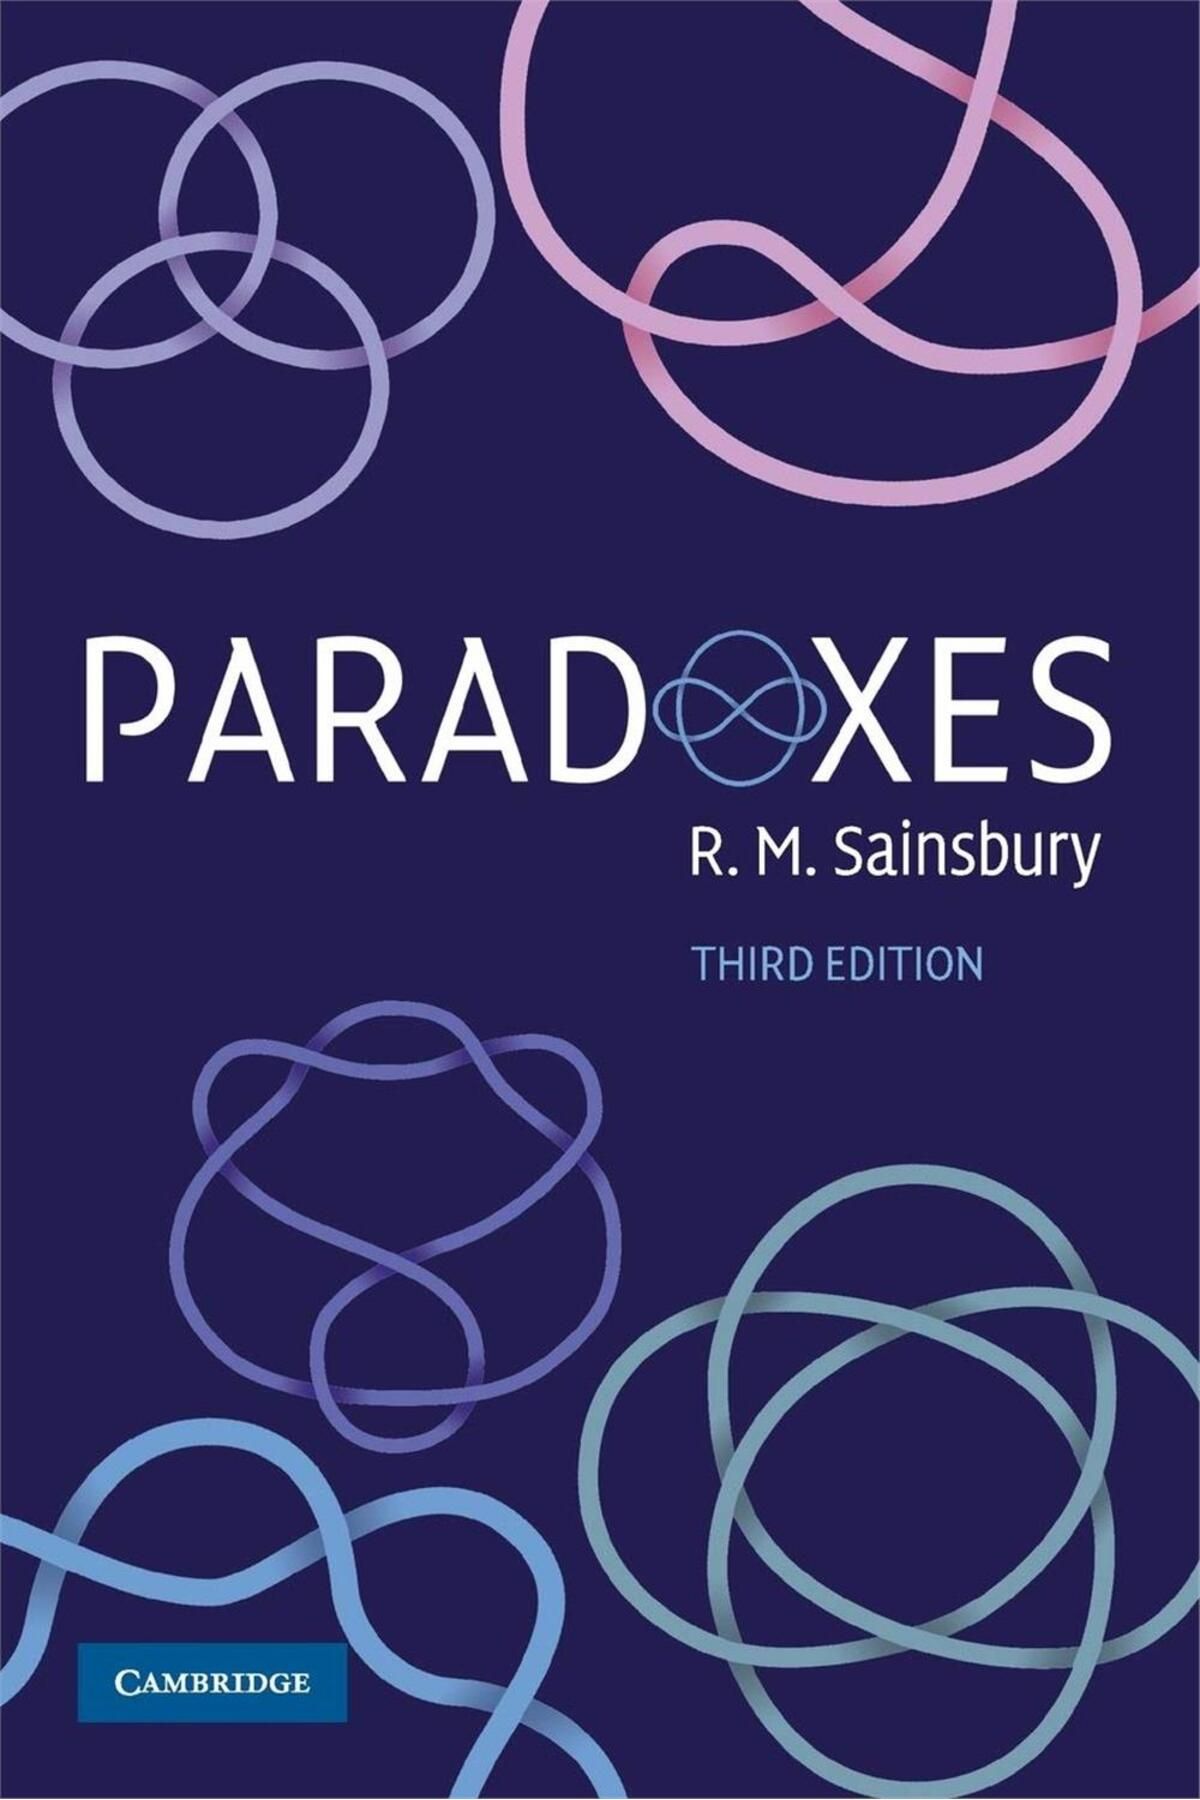 Cambridge University Paradoxes, R.M Sainsbury, 3rd edition